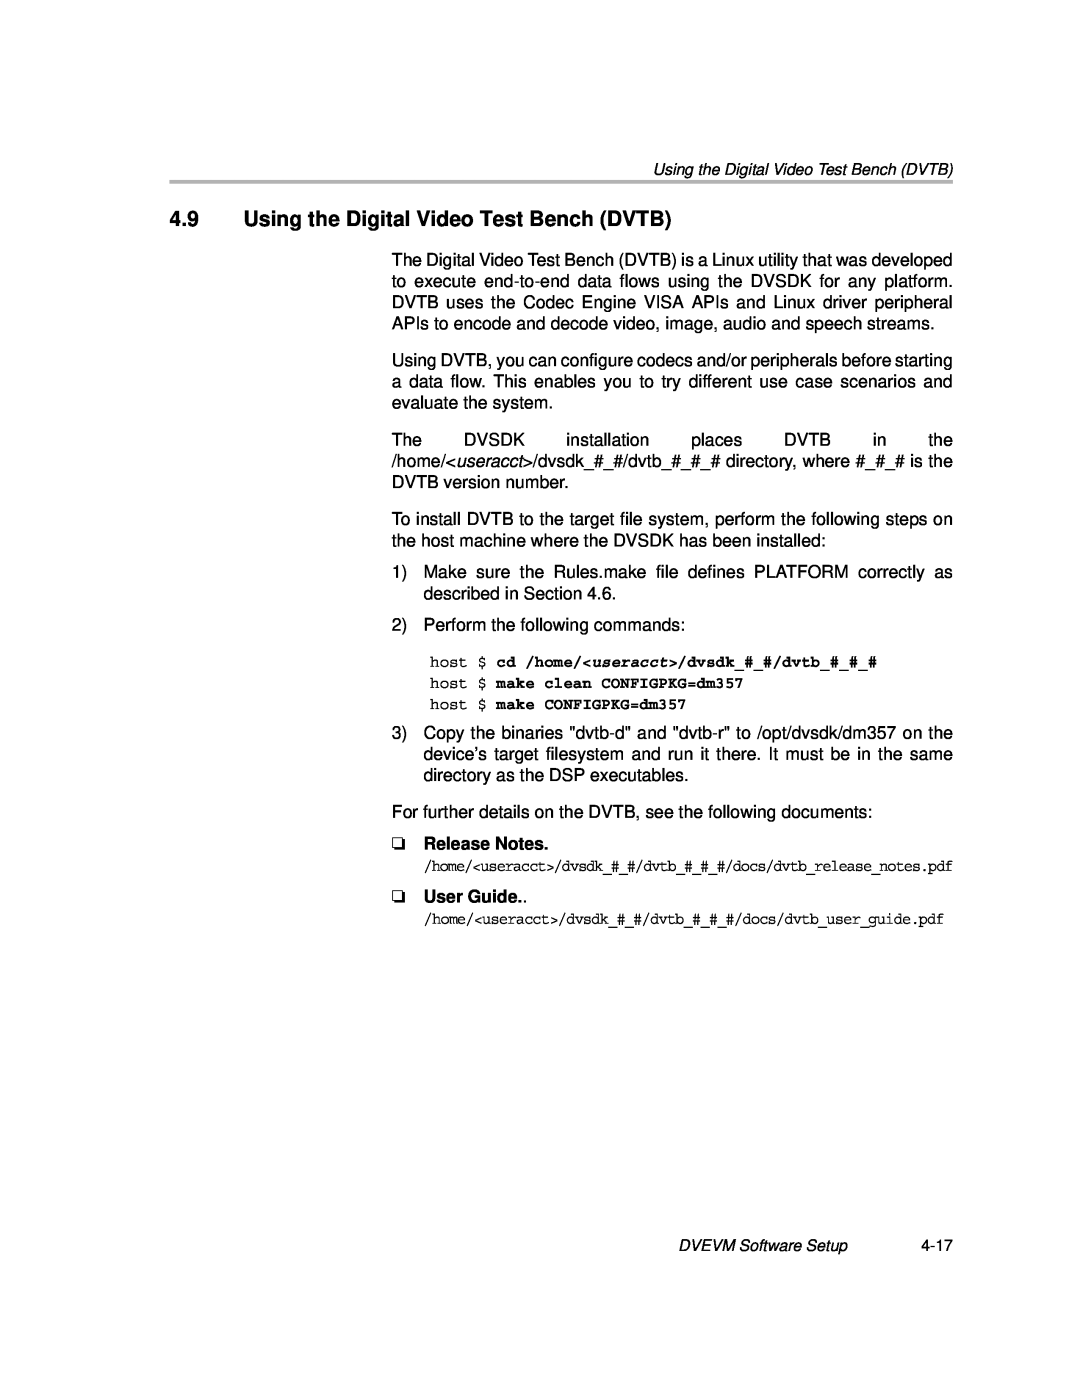 Texas Instruments TMS320DM357 DVEVM v2.05 manual 4.9Using the Digital Video Test Bench DVTB, Release Notes, User Guide 